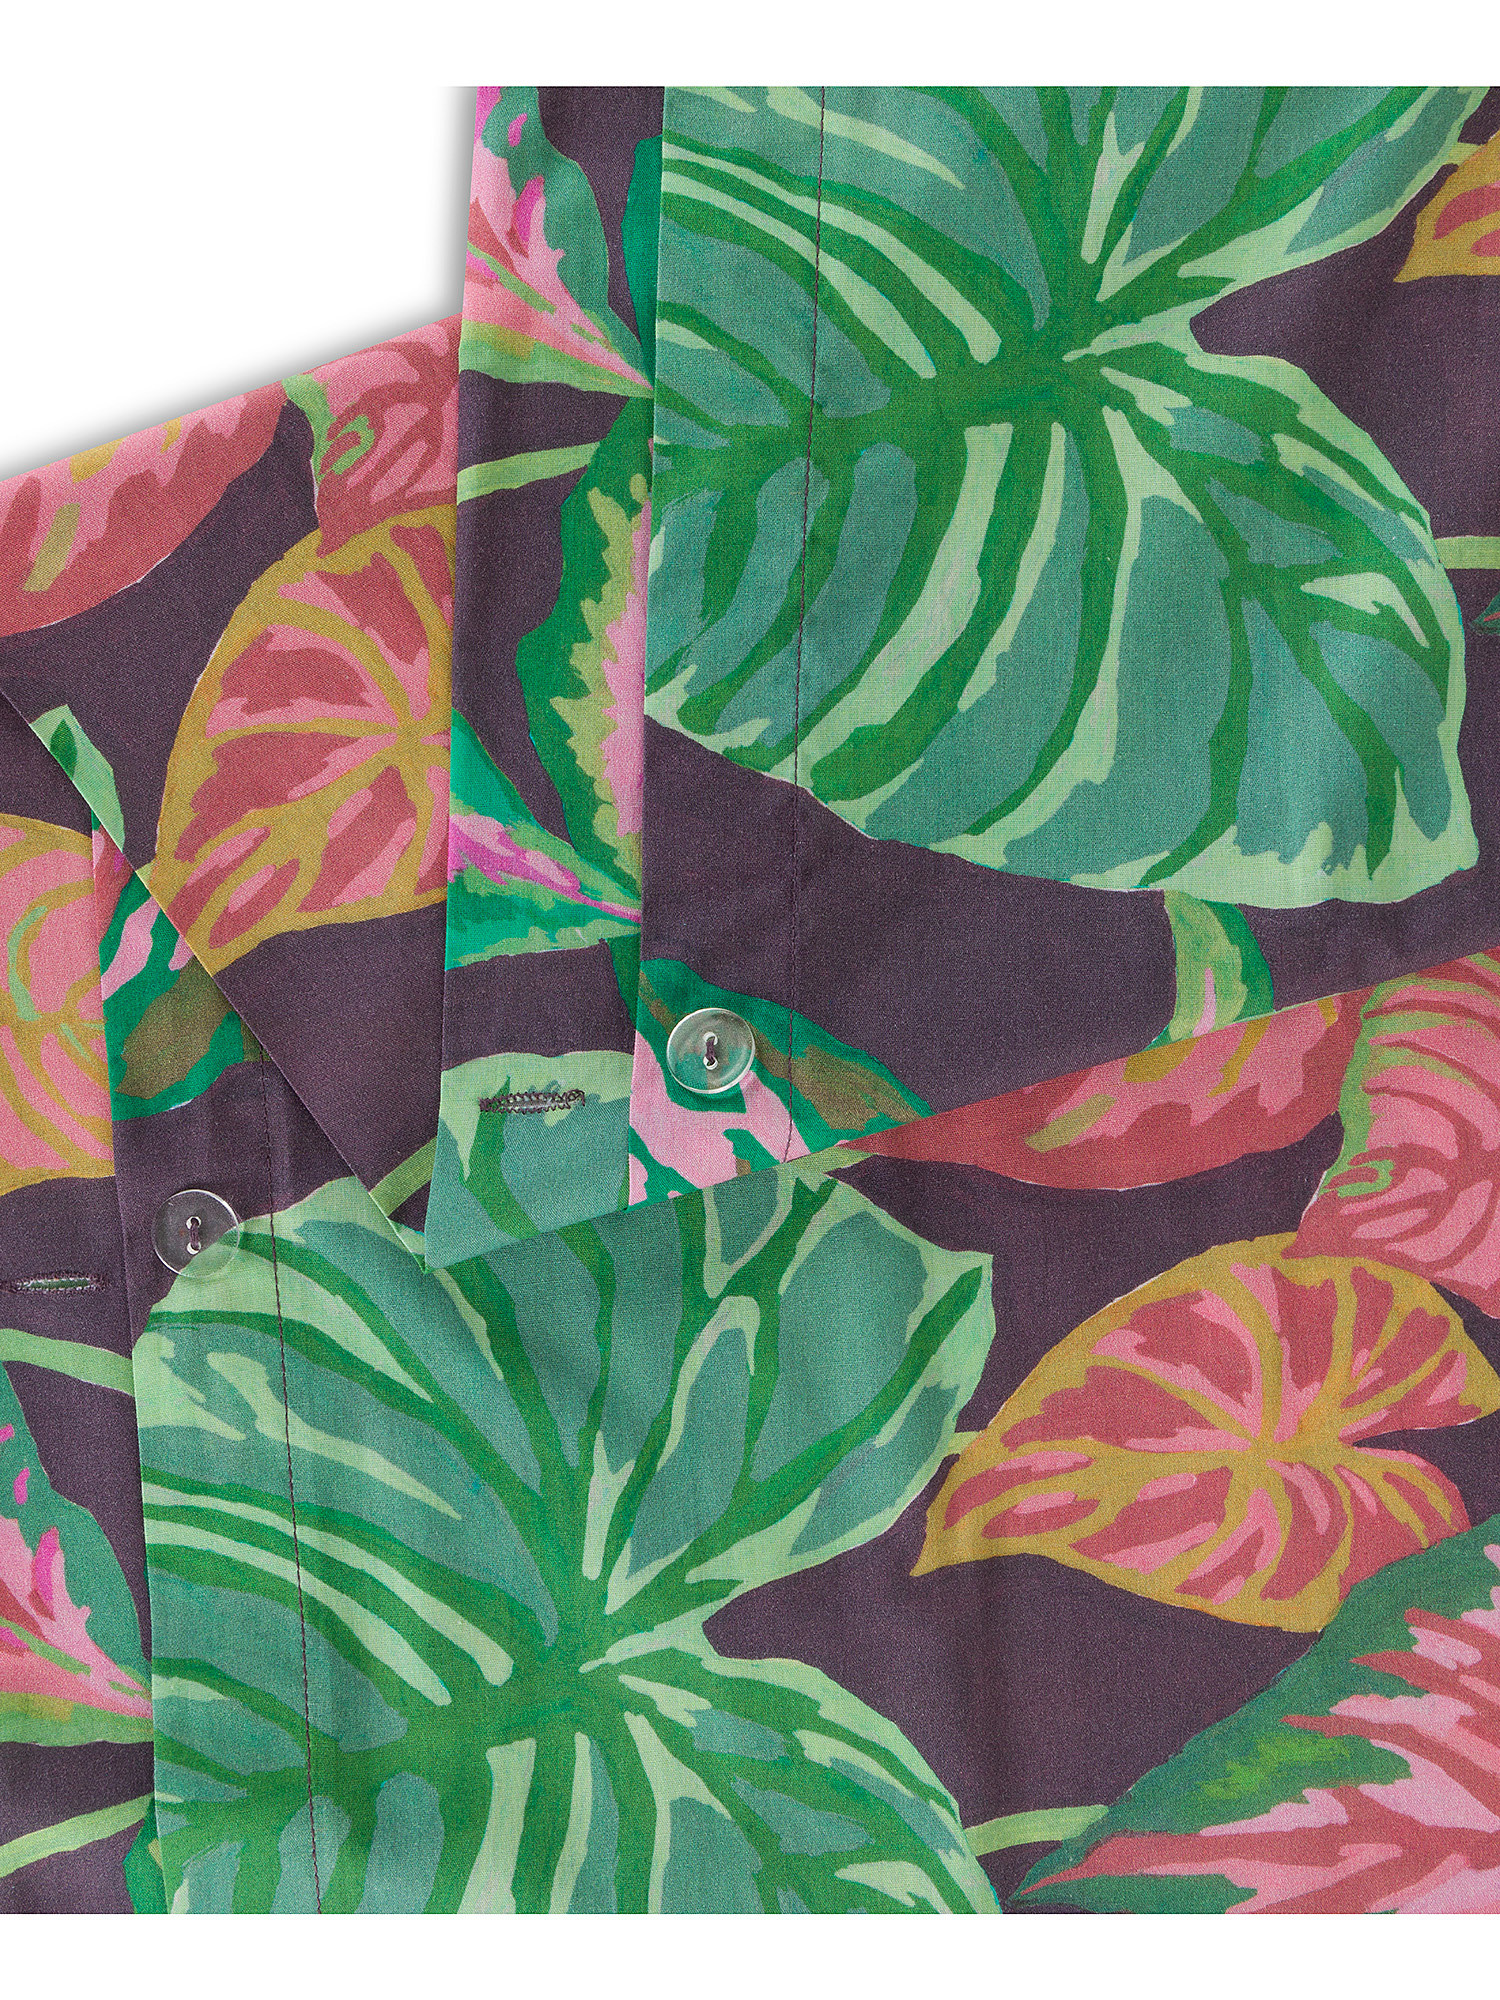 Leaf print cotton percale duvet cover set, Multicolor, large image number 1